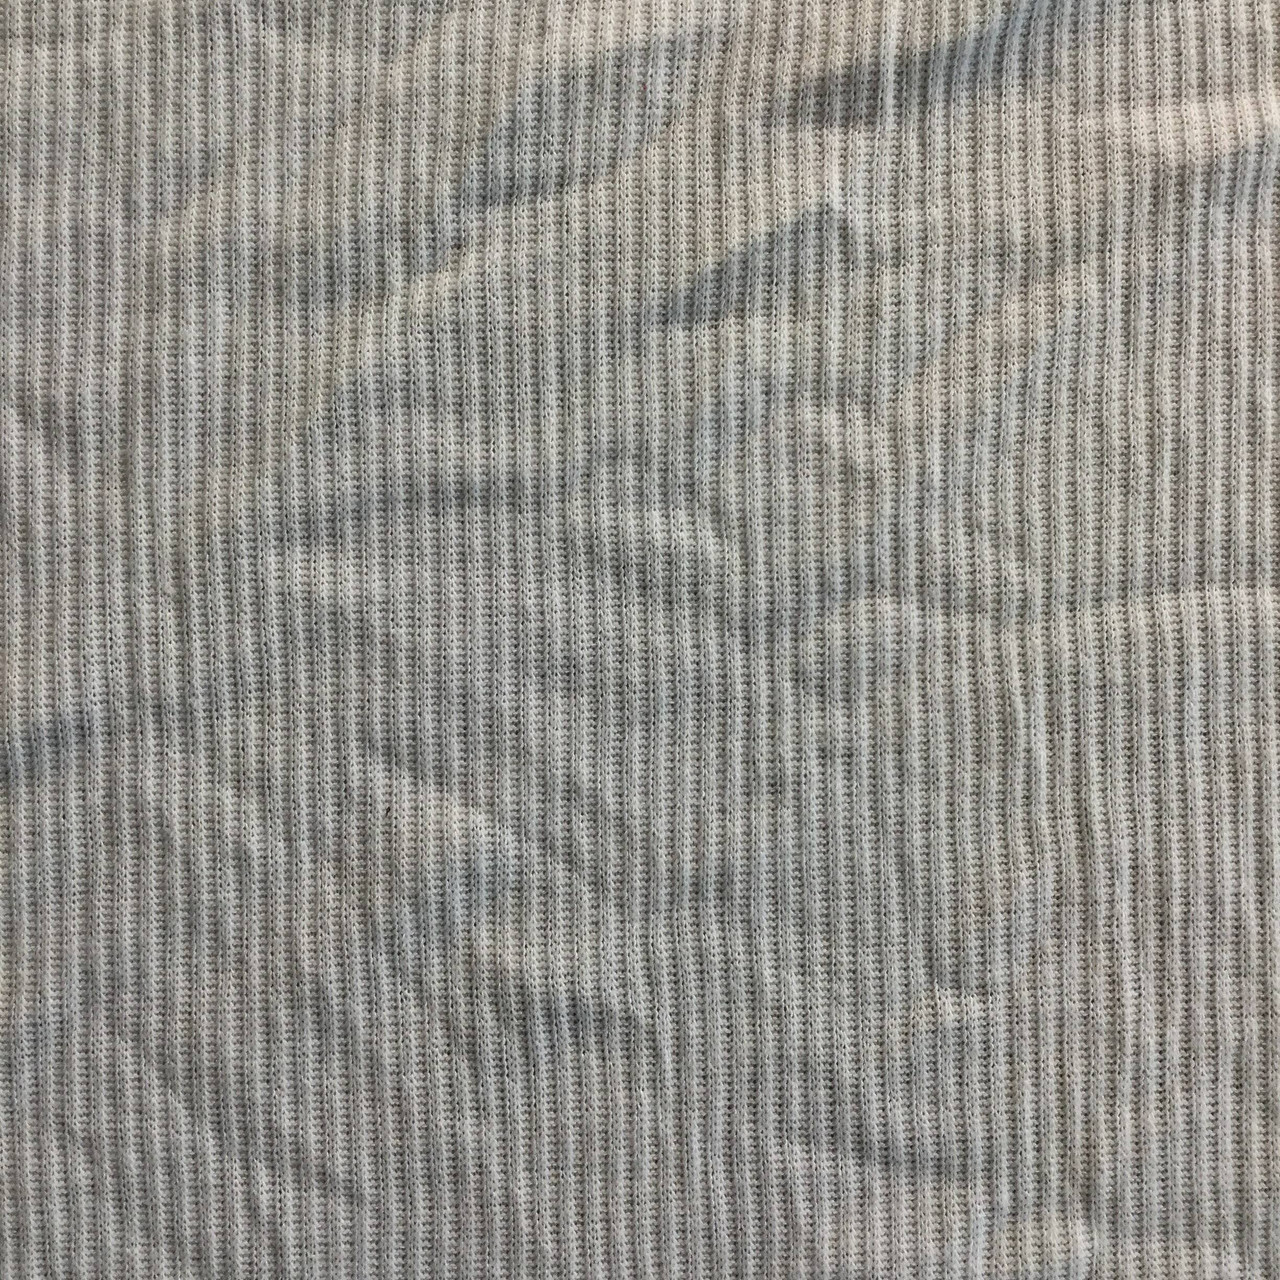 Ivory 2x2 RIb Knit Fabric | Polyblend 2-Way Stretch | Sweaters, Scarfs,  T-Shirts